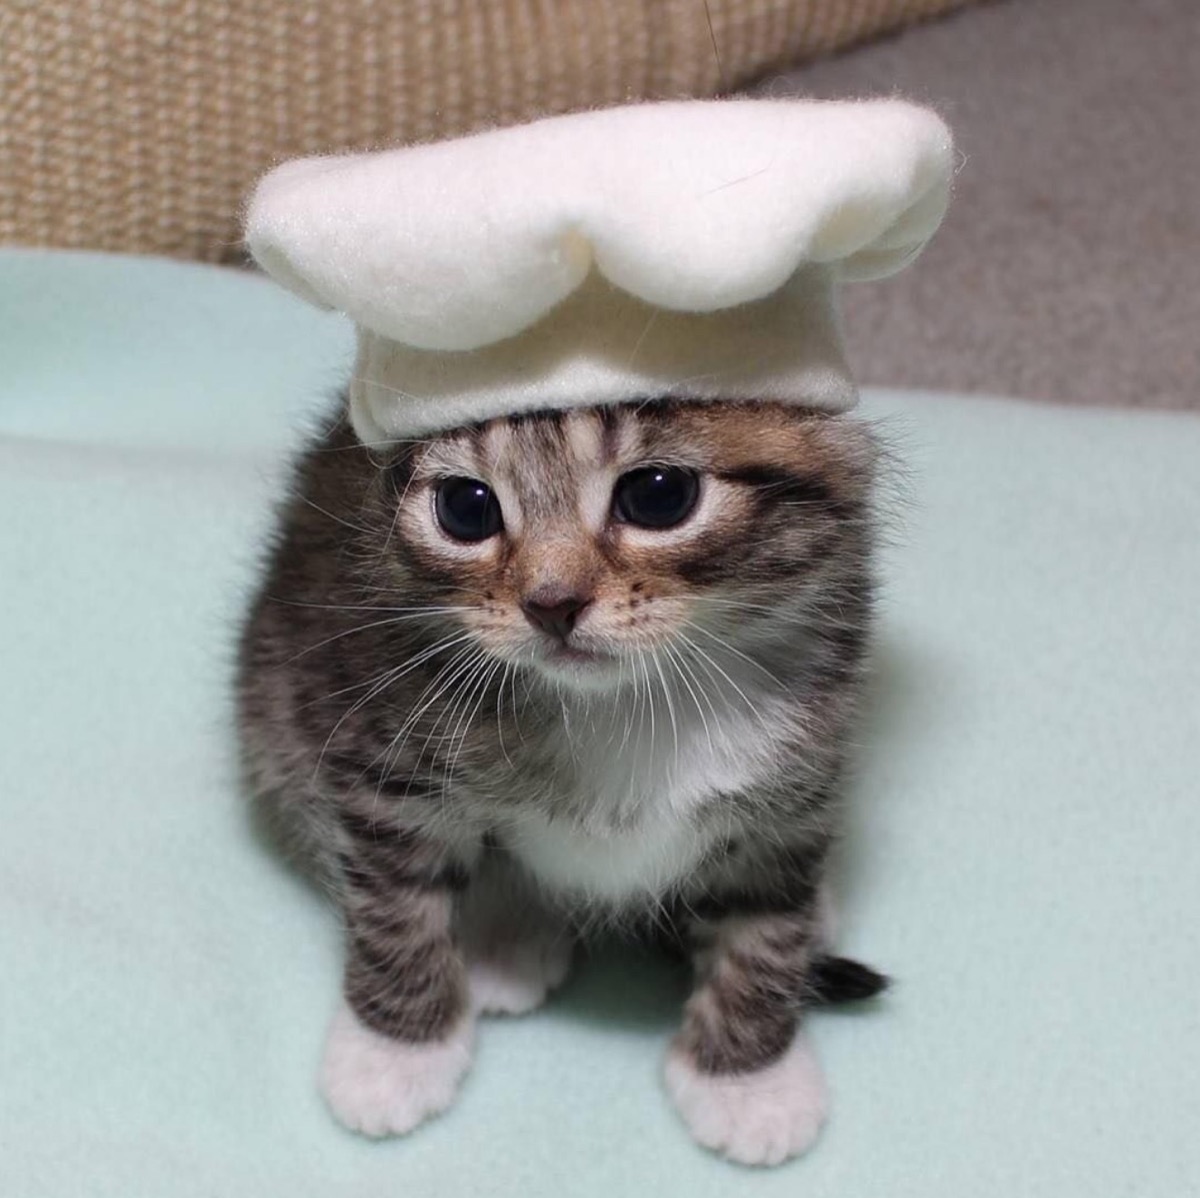 cat in chef's hat adorable cat photos